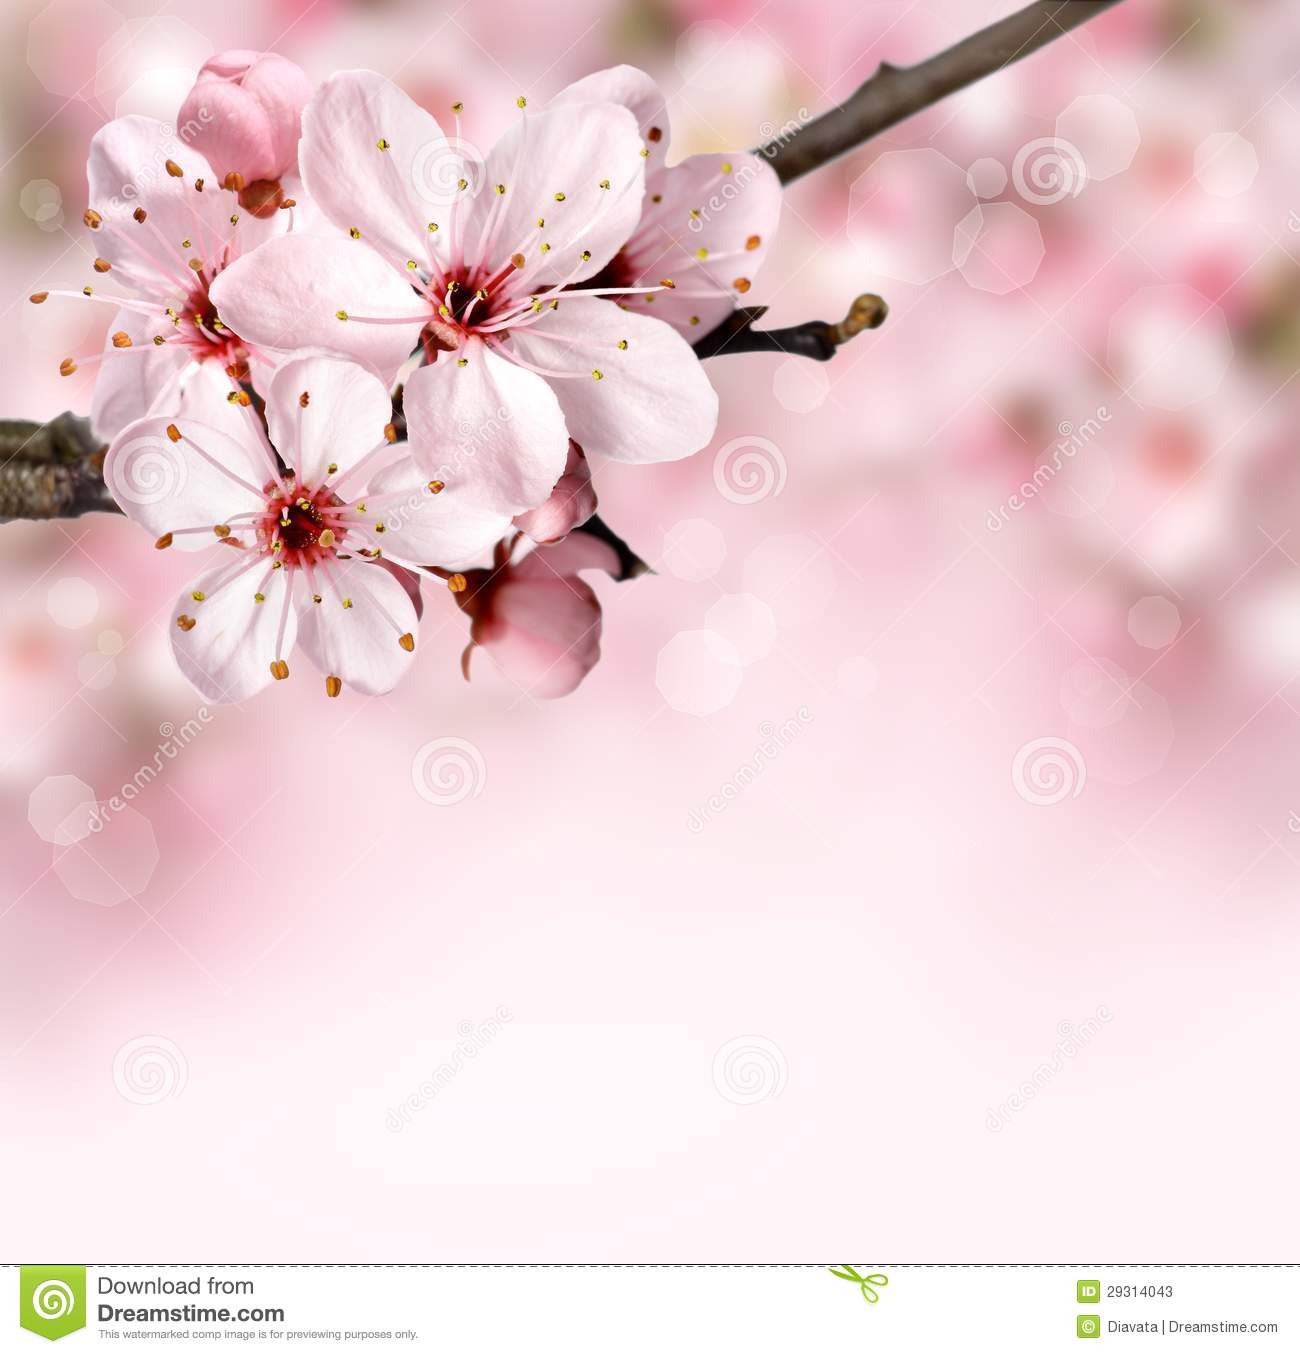 Vector Pink Spring Blossoms On Vines Digital Border Design By